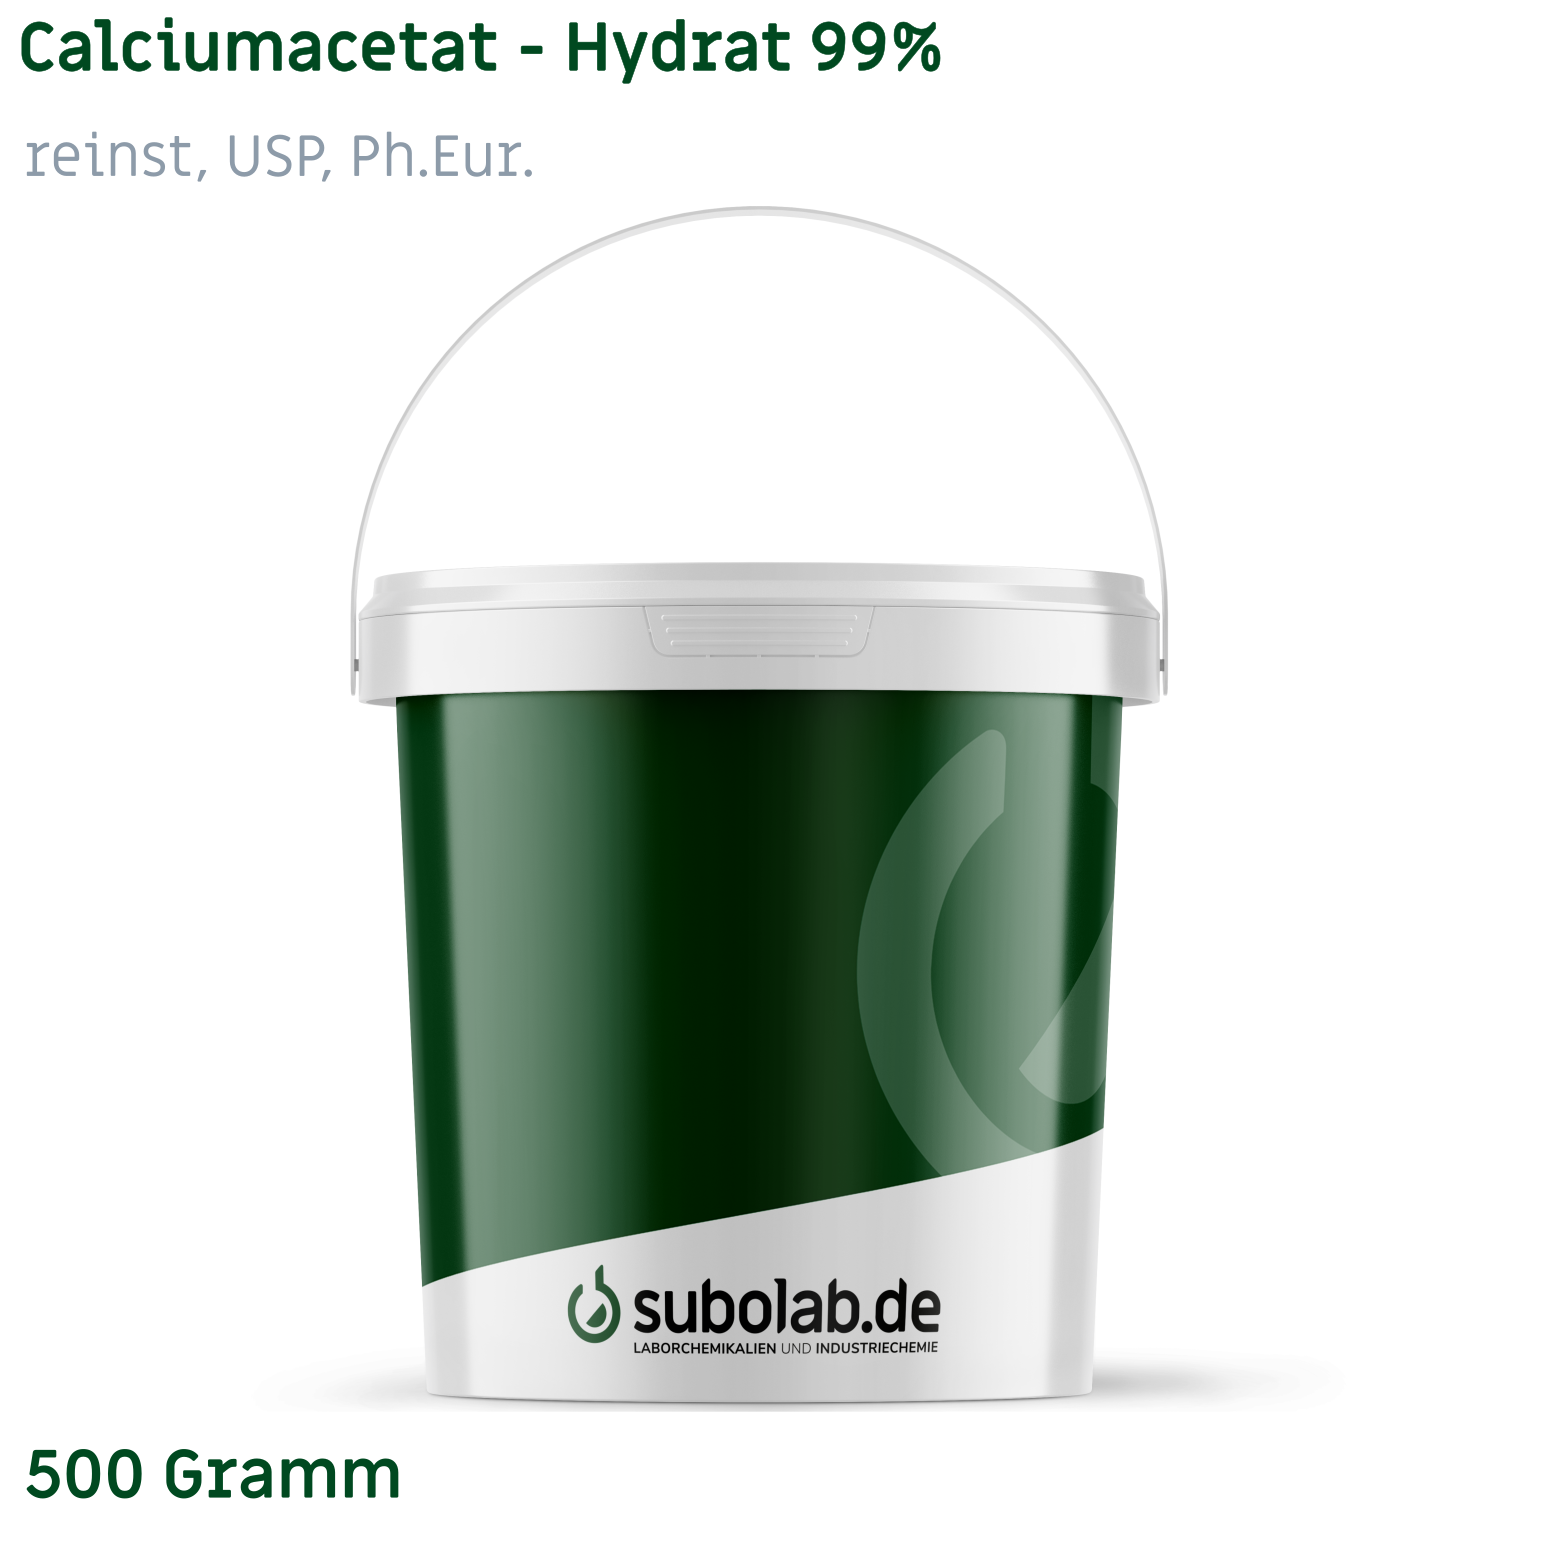 Bild von Calciumacetat - Hydrat 99% reinst, USP, Ph.Eur. (500 Gramm)